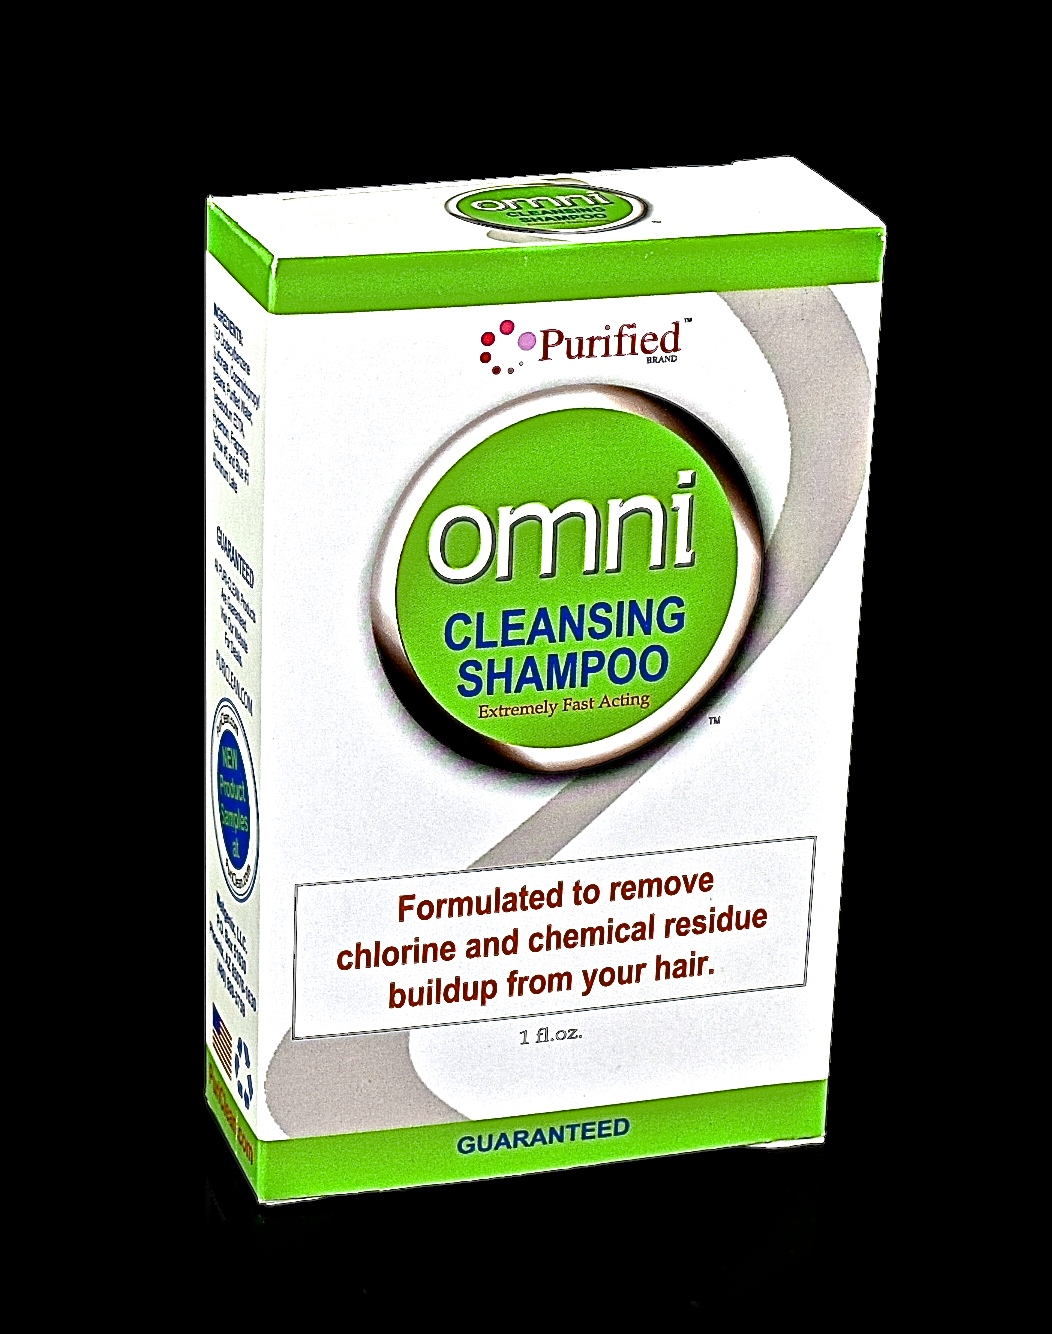 Shampoo Detox Drug Shampoos Follicle Cleansing Omni Tests.